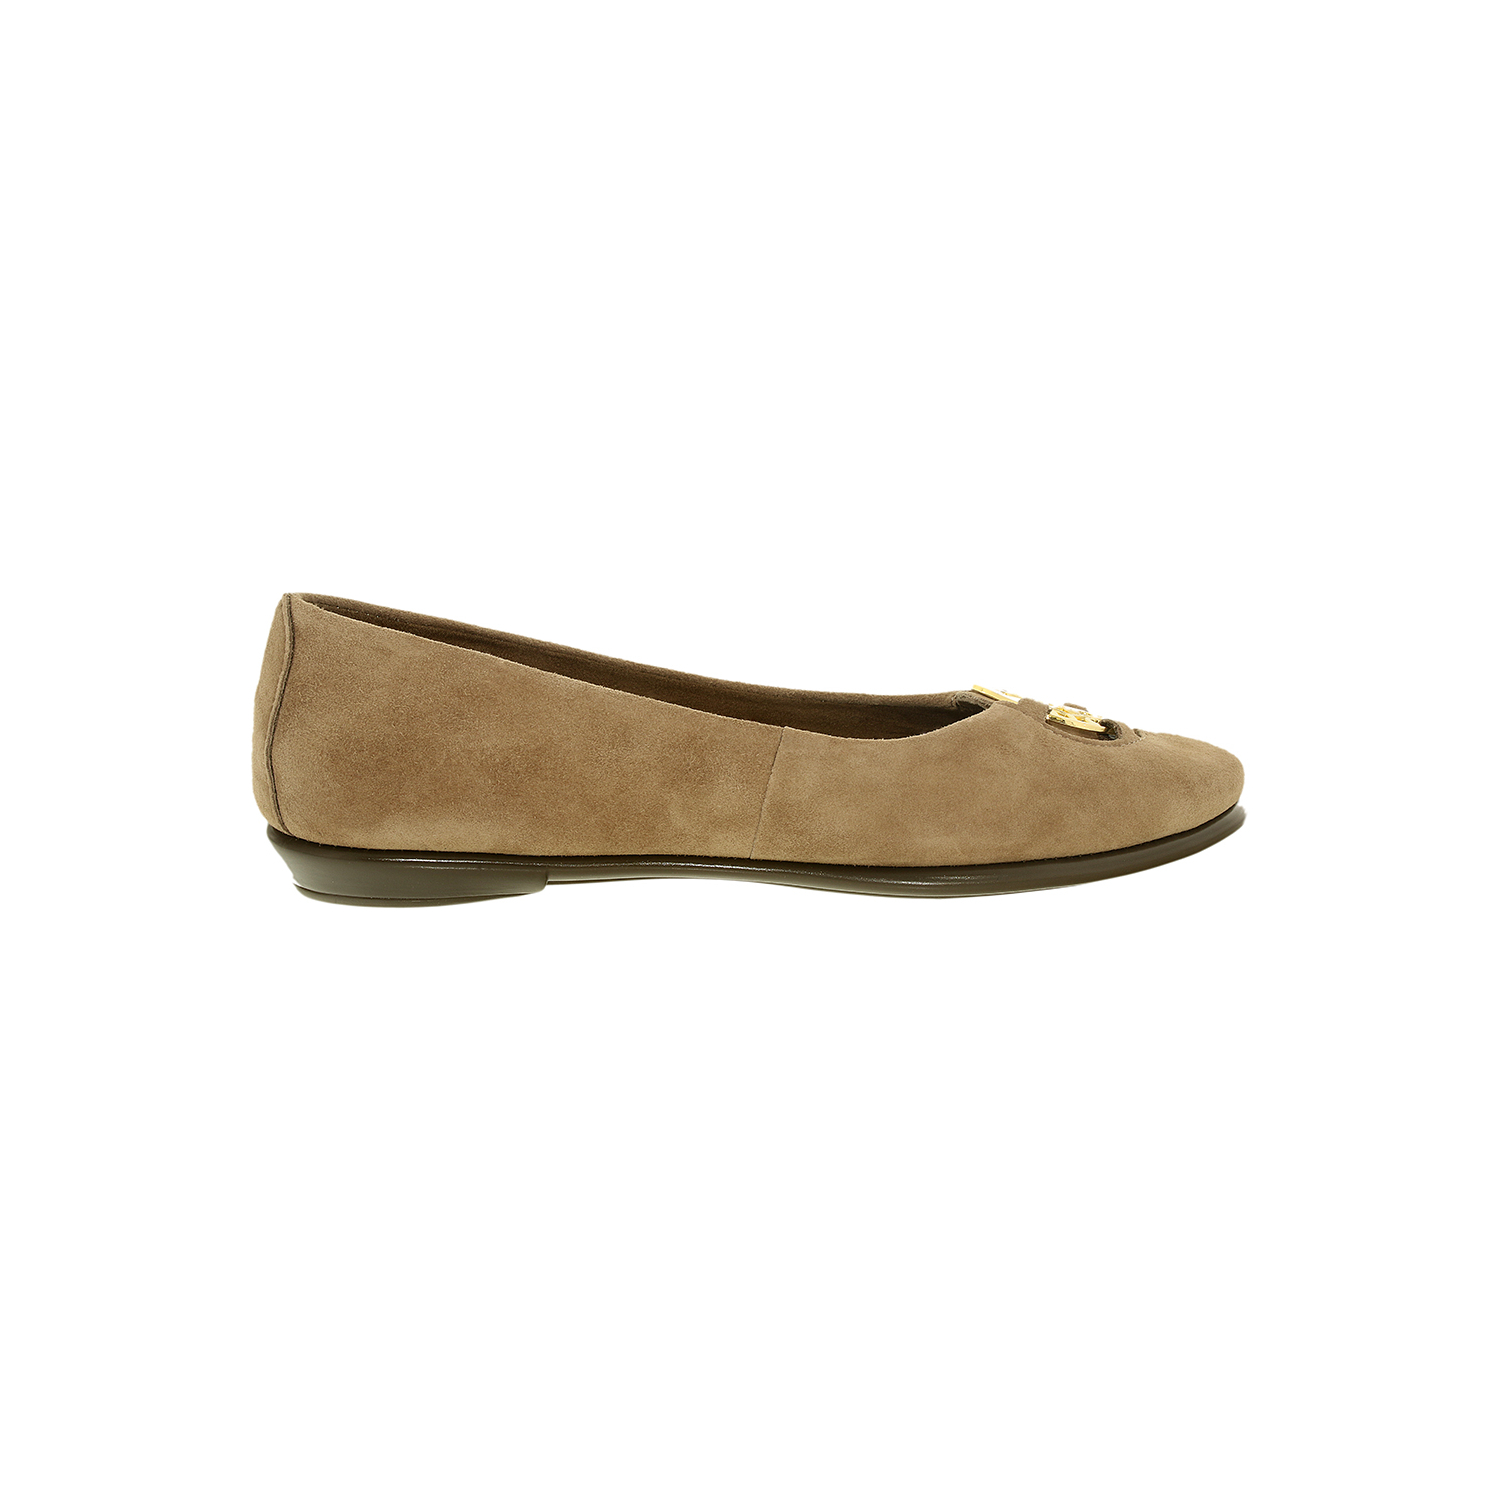 Aerosoles Women's Exhibet Suede Ankle-High Leather Flat Shoe | eBay